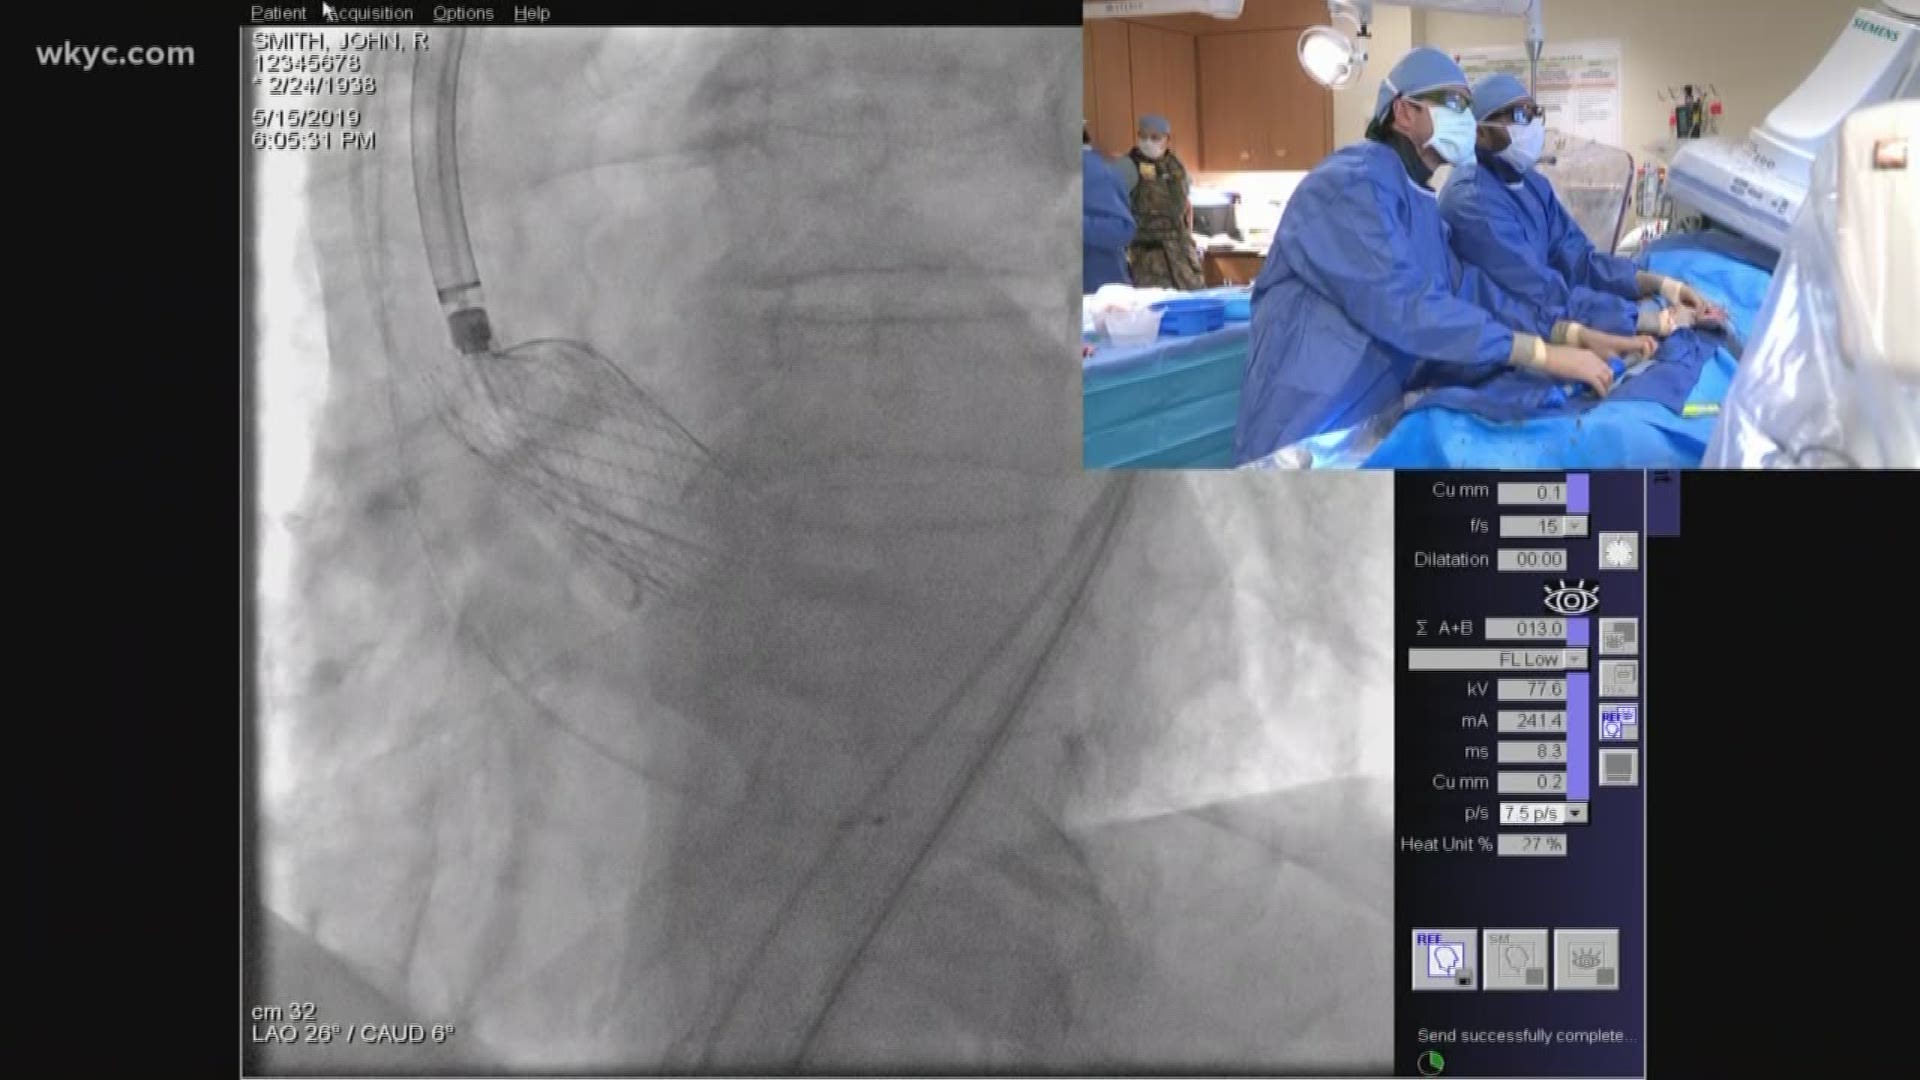 WKYC.com streams live TAVR heart surgery